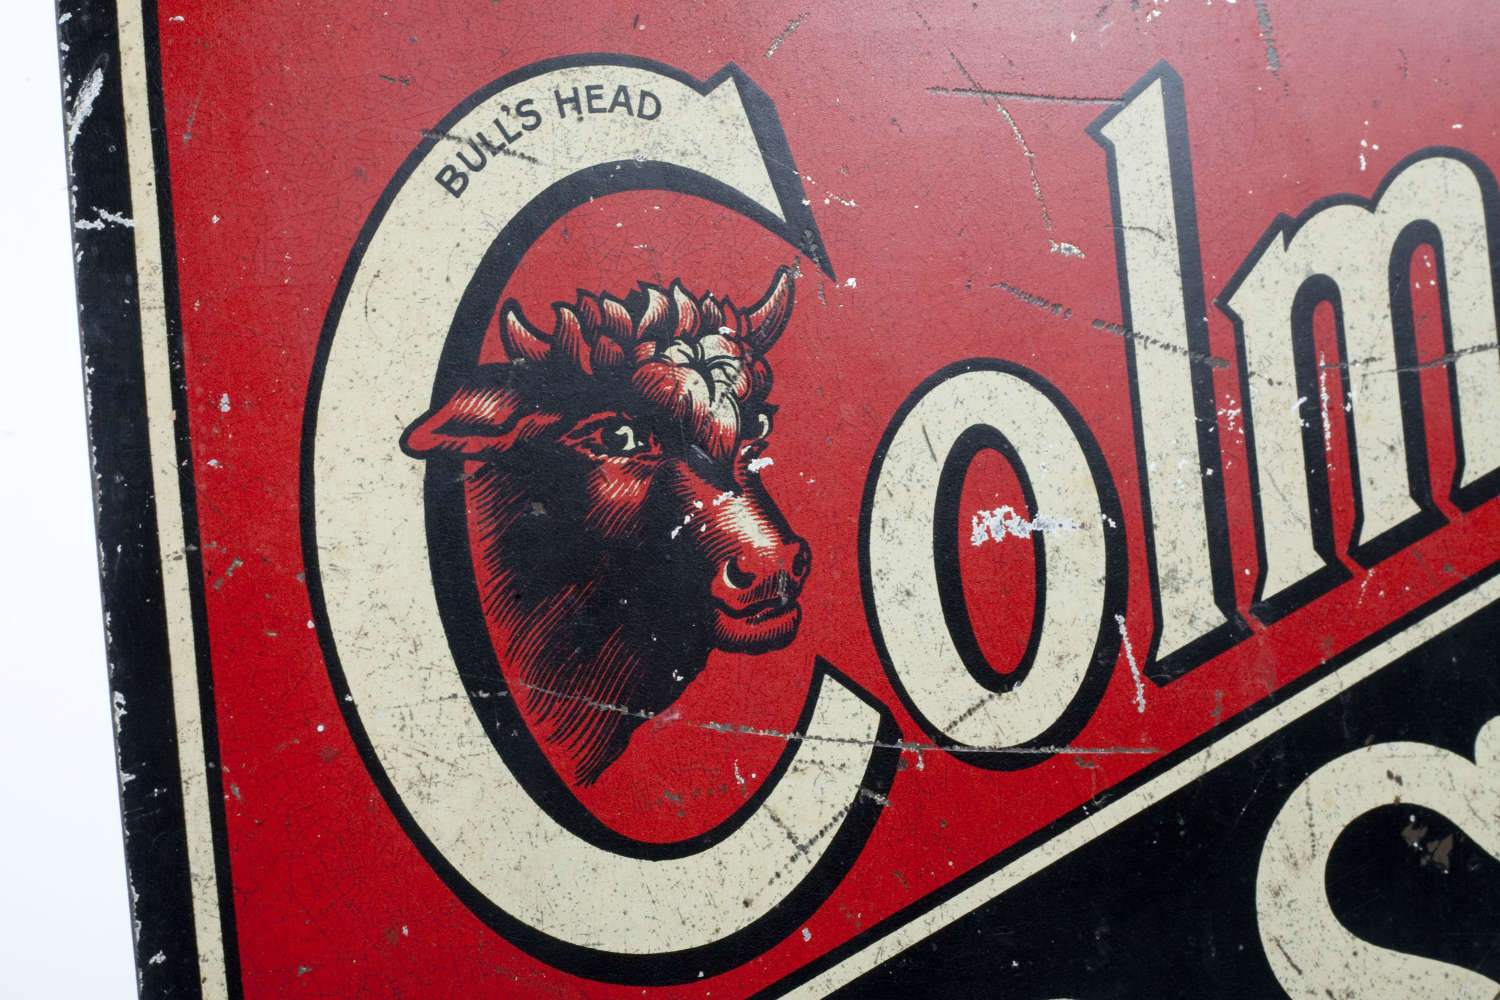 Original tin advertising sign for Colman's Starch